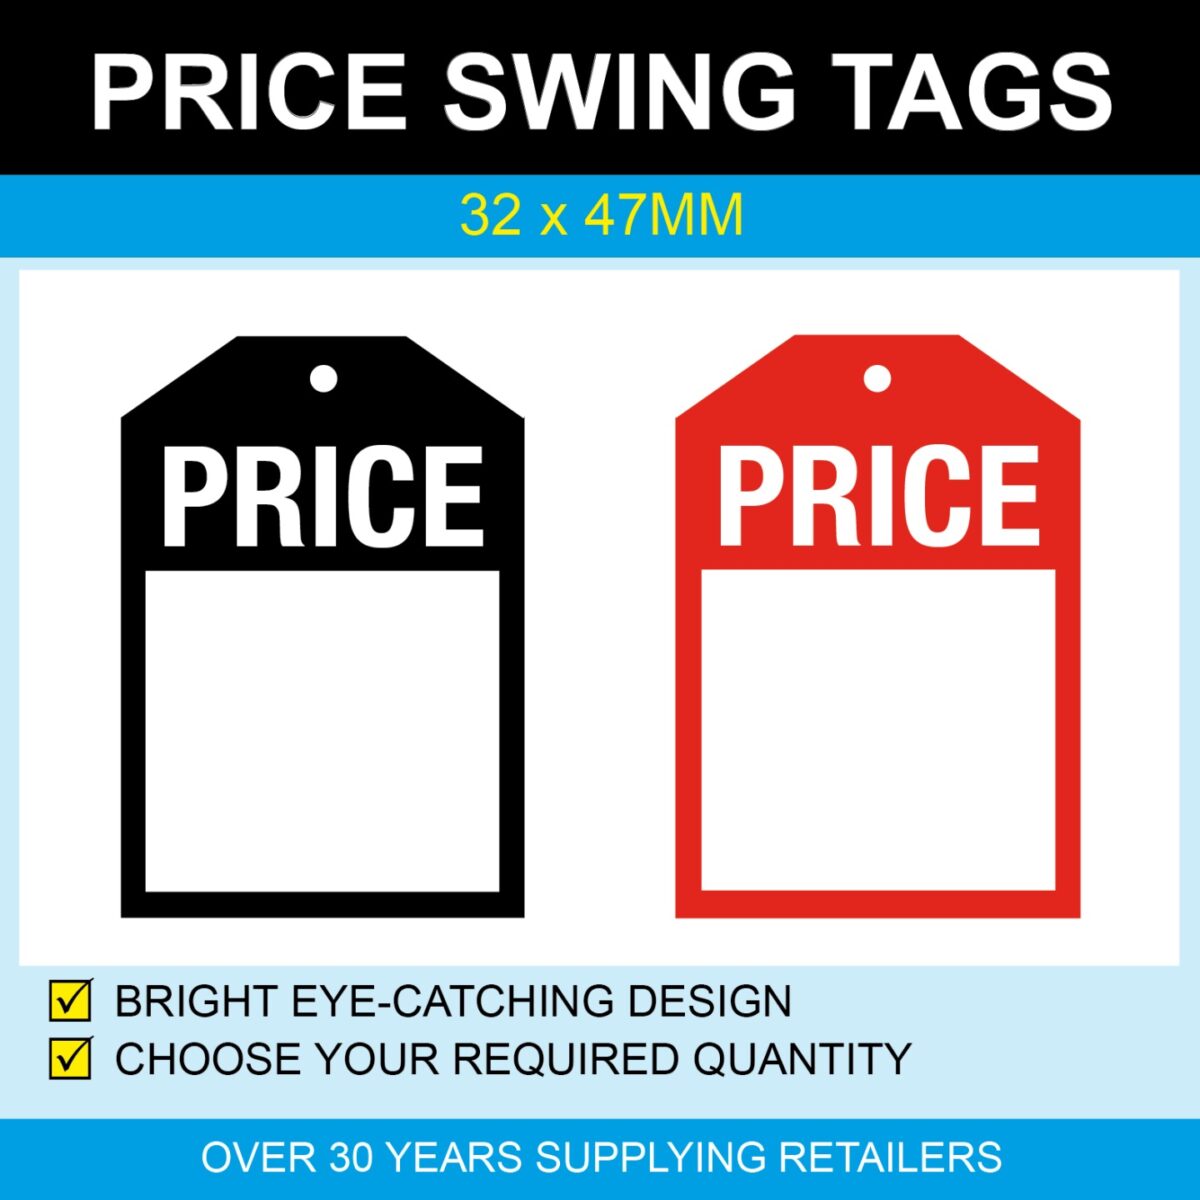 Price Swing Tags